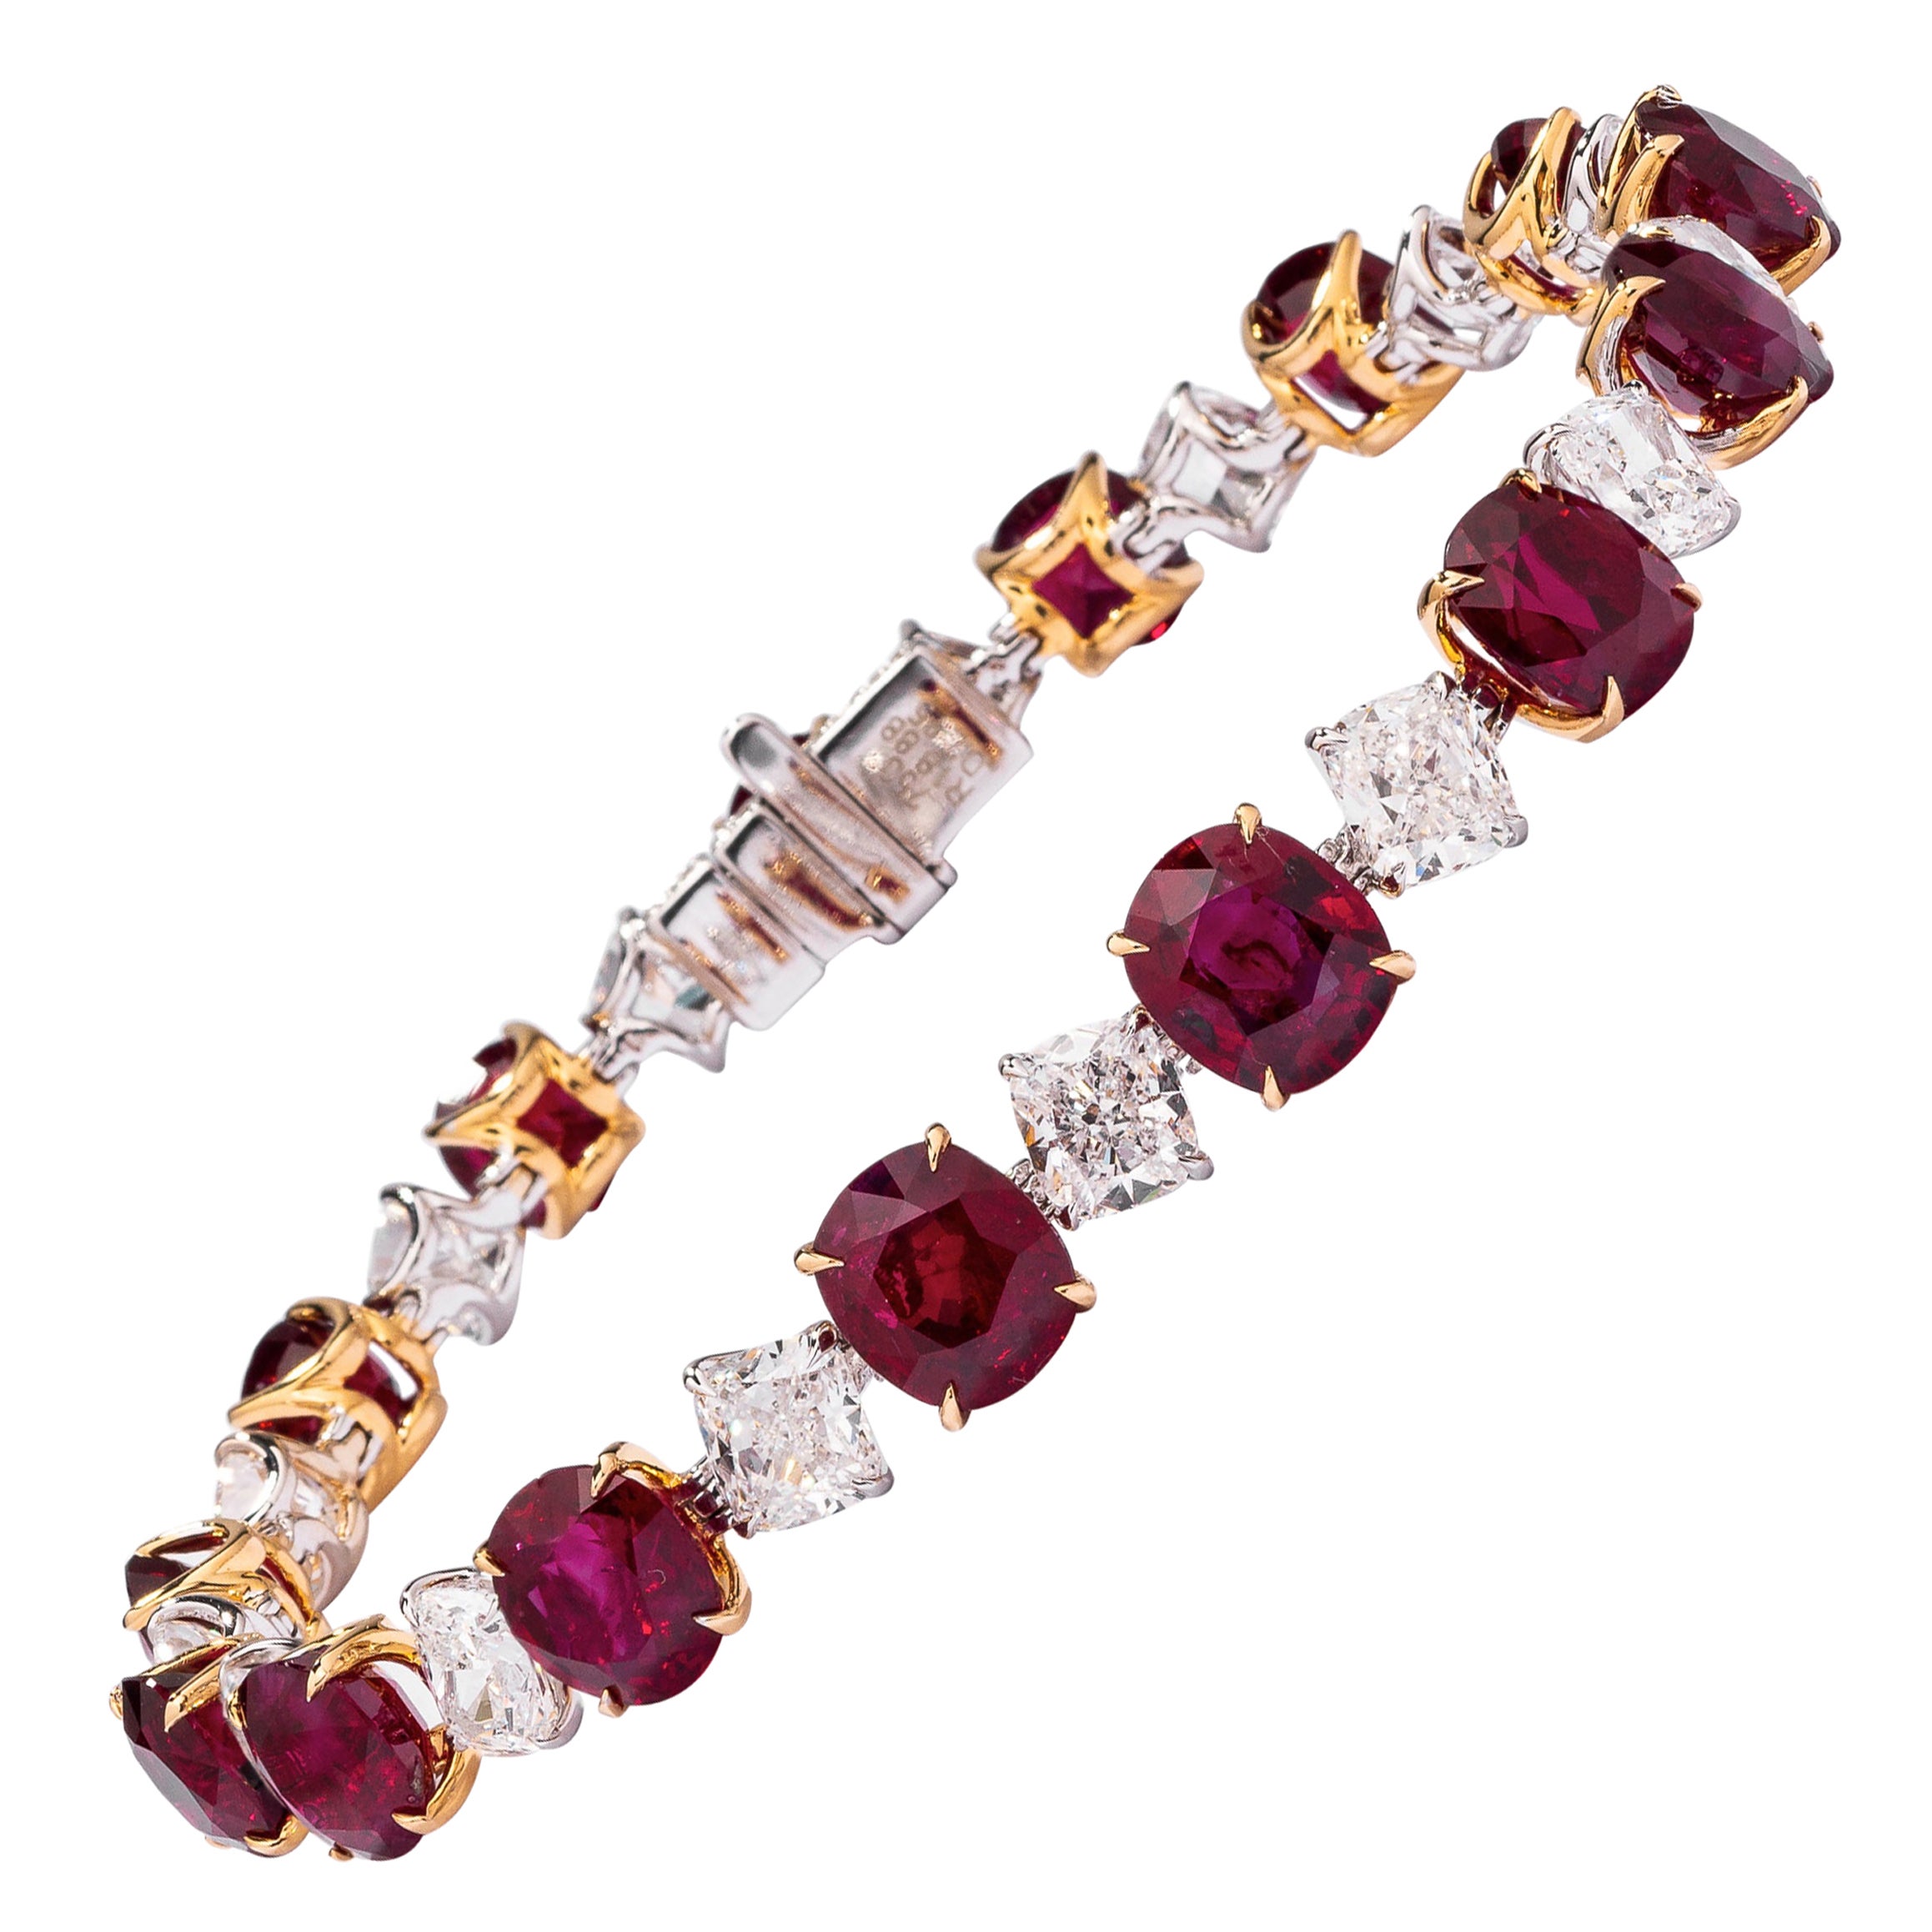 Gubelin Certified 26.92 Carat Burmese Ruby and Diamond Bracelet in 18K Gold For Sale